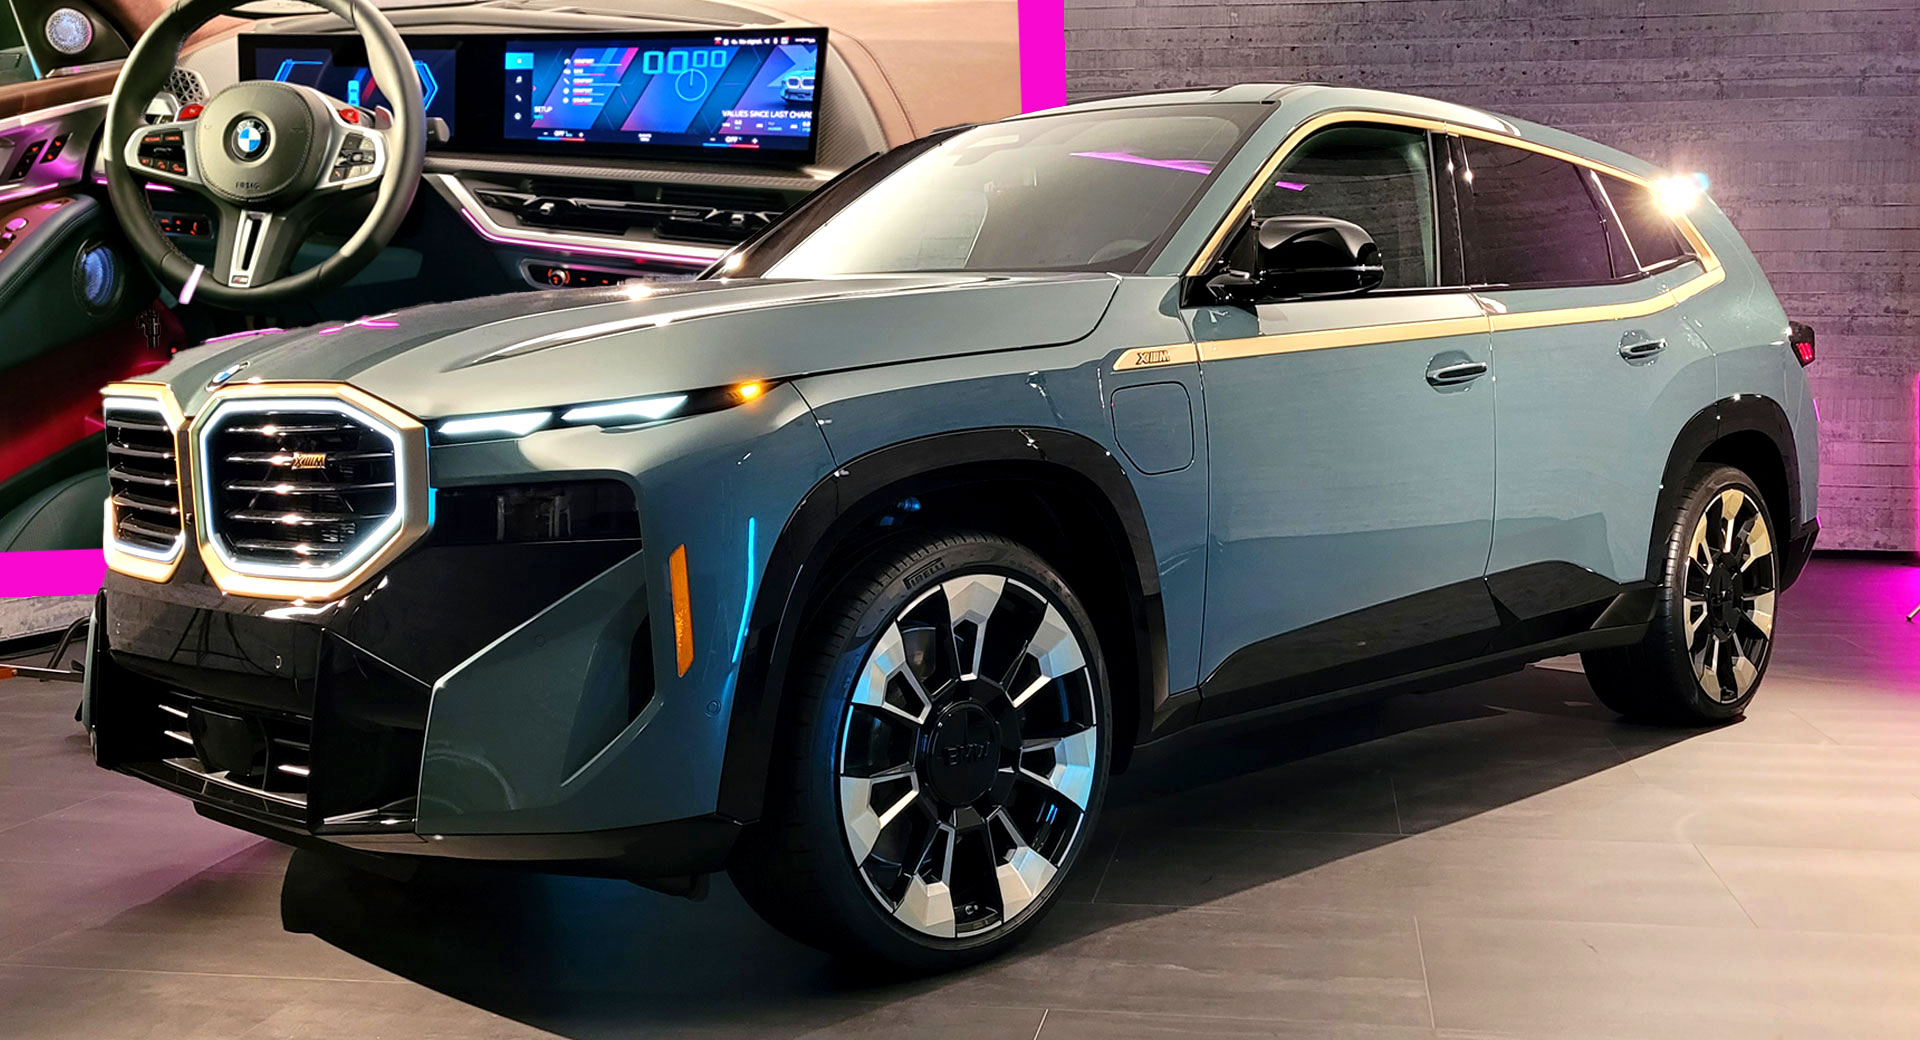 We Get Up Close To The 2023 BMW XM PlugIn Hybrid SUV Cars News Informer